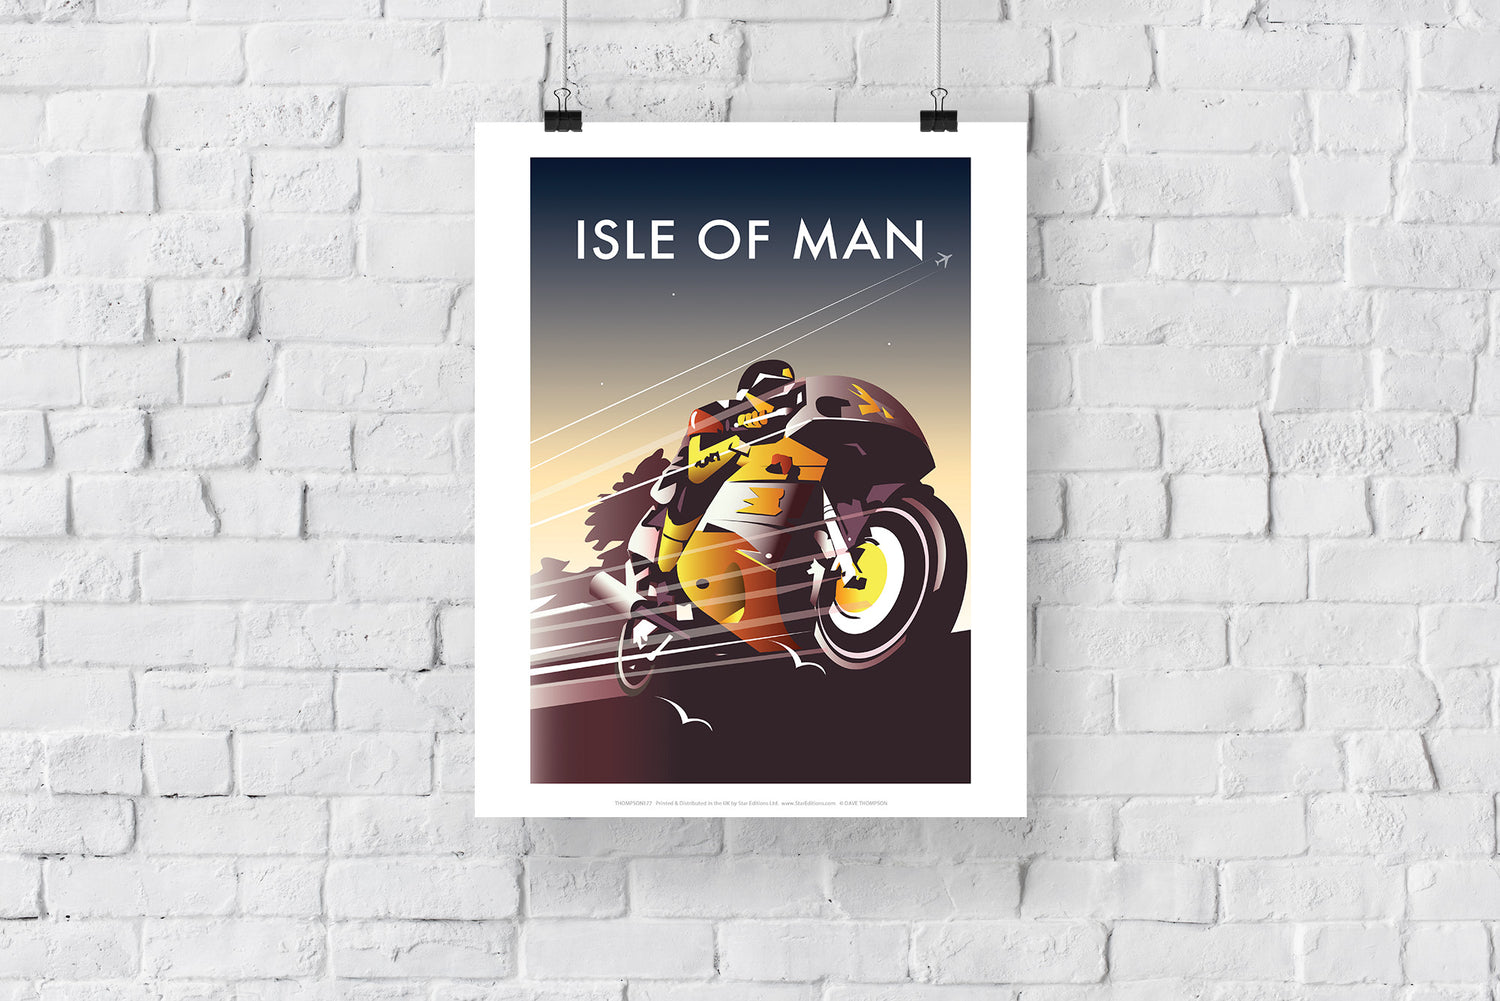 Isle of Man Racer - Art Print